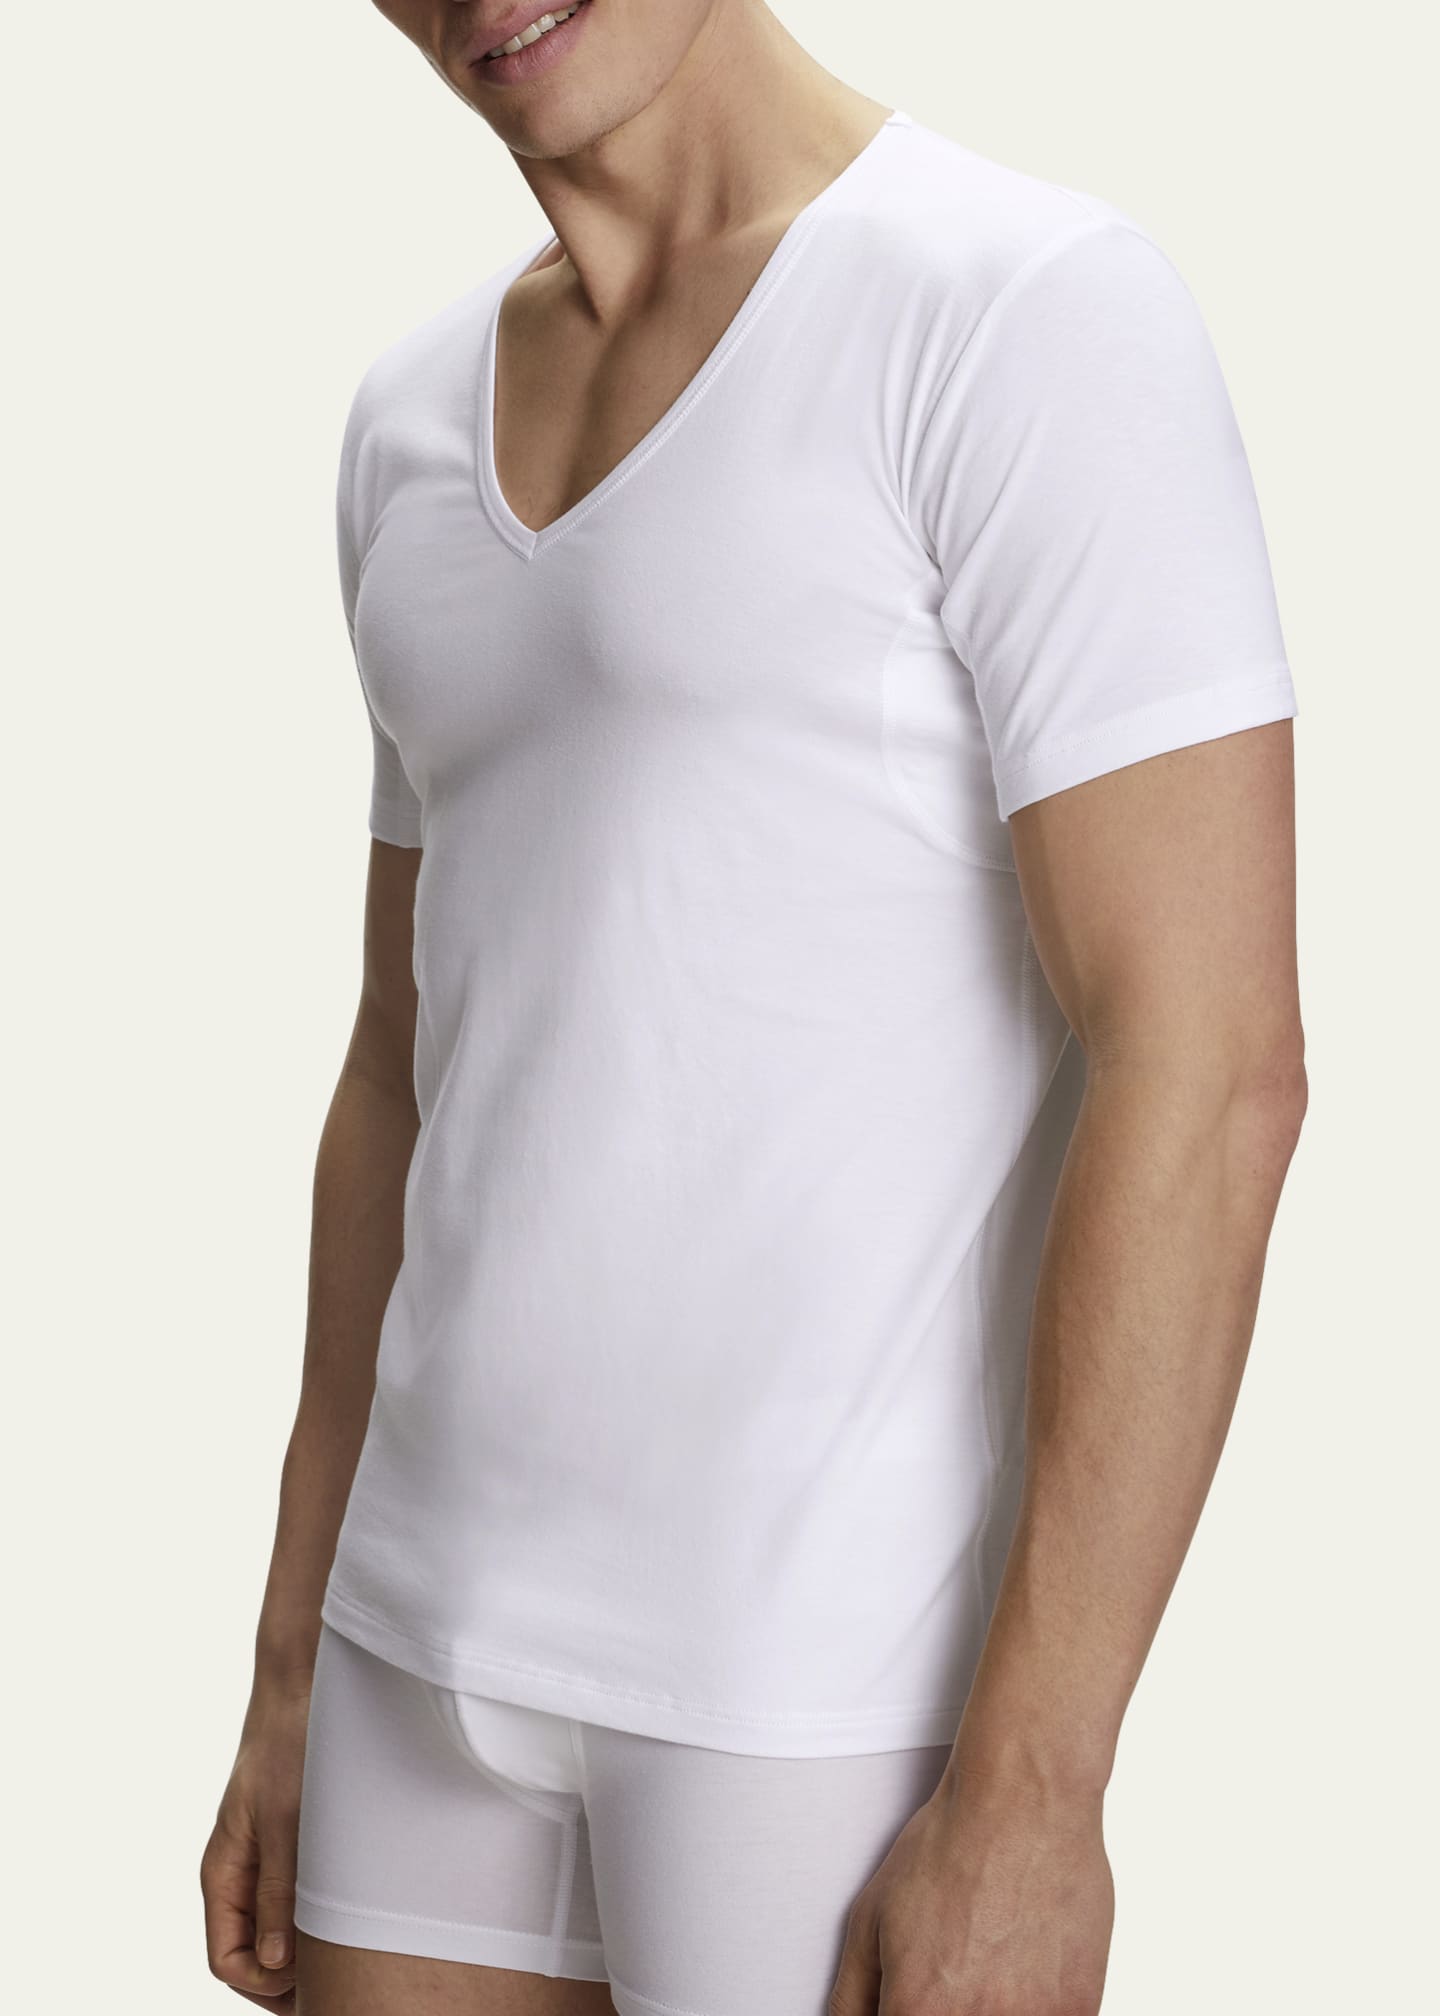 Falke Men's Cotton-Stretch V-Neck T-Shirt - Bergdorf Goodman